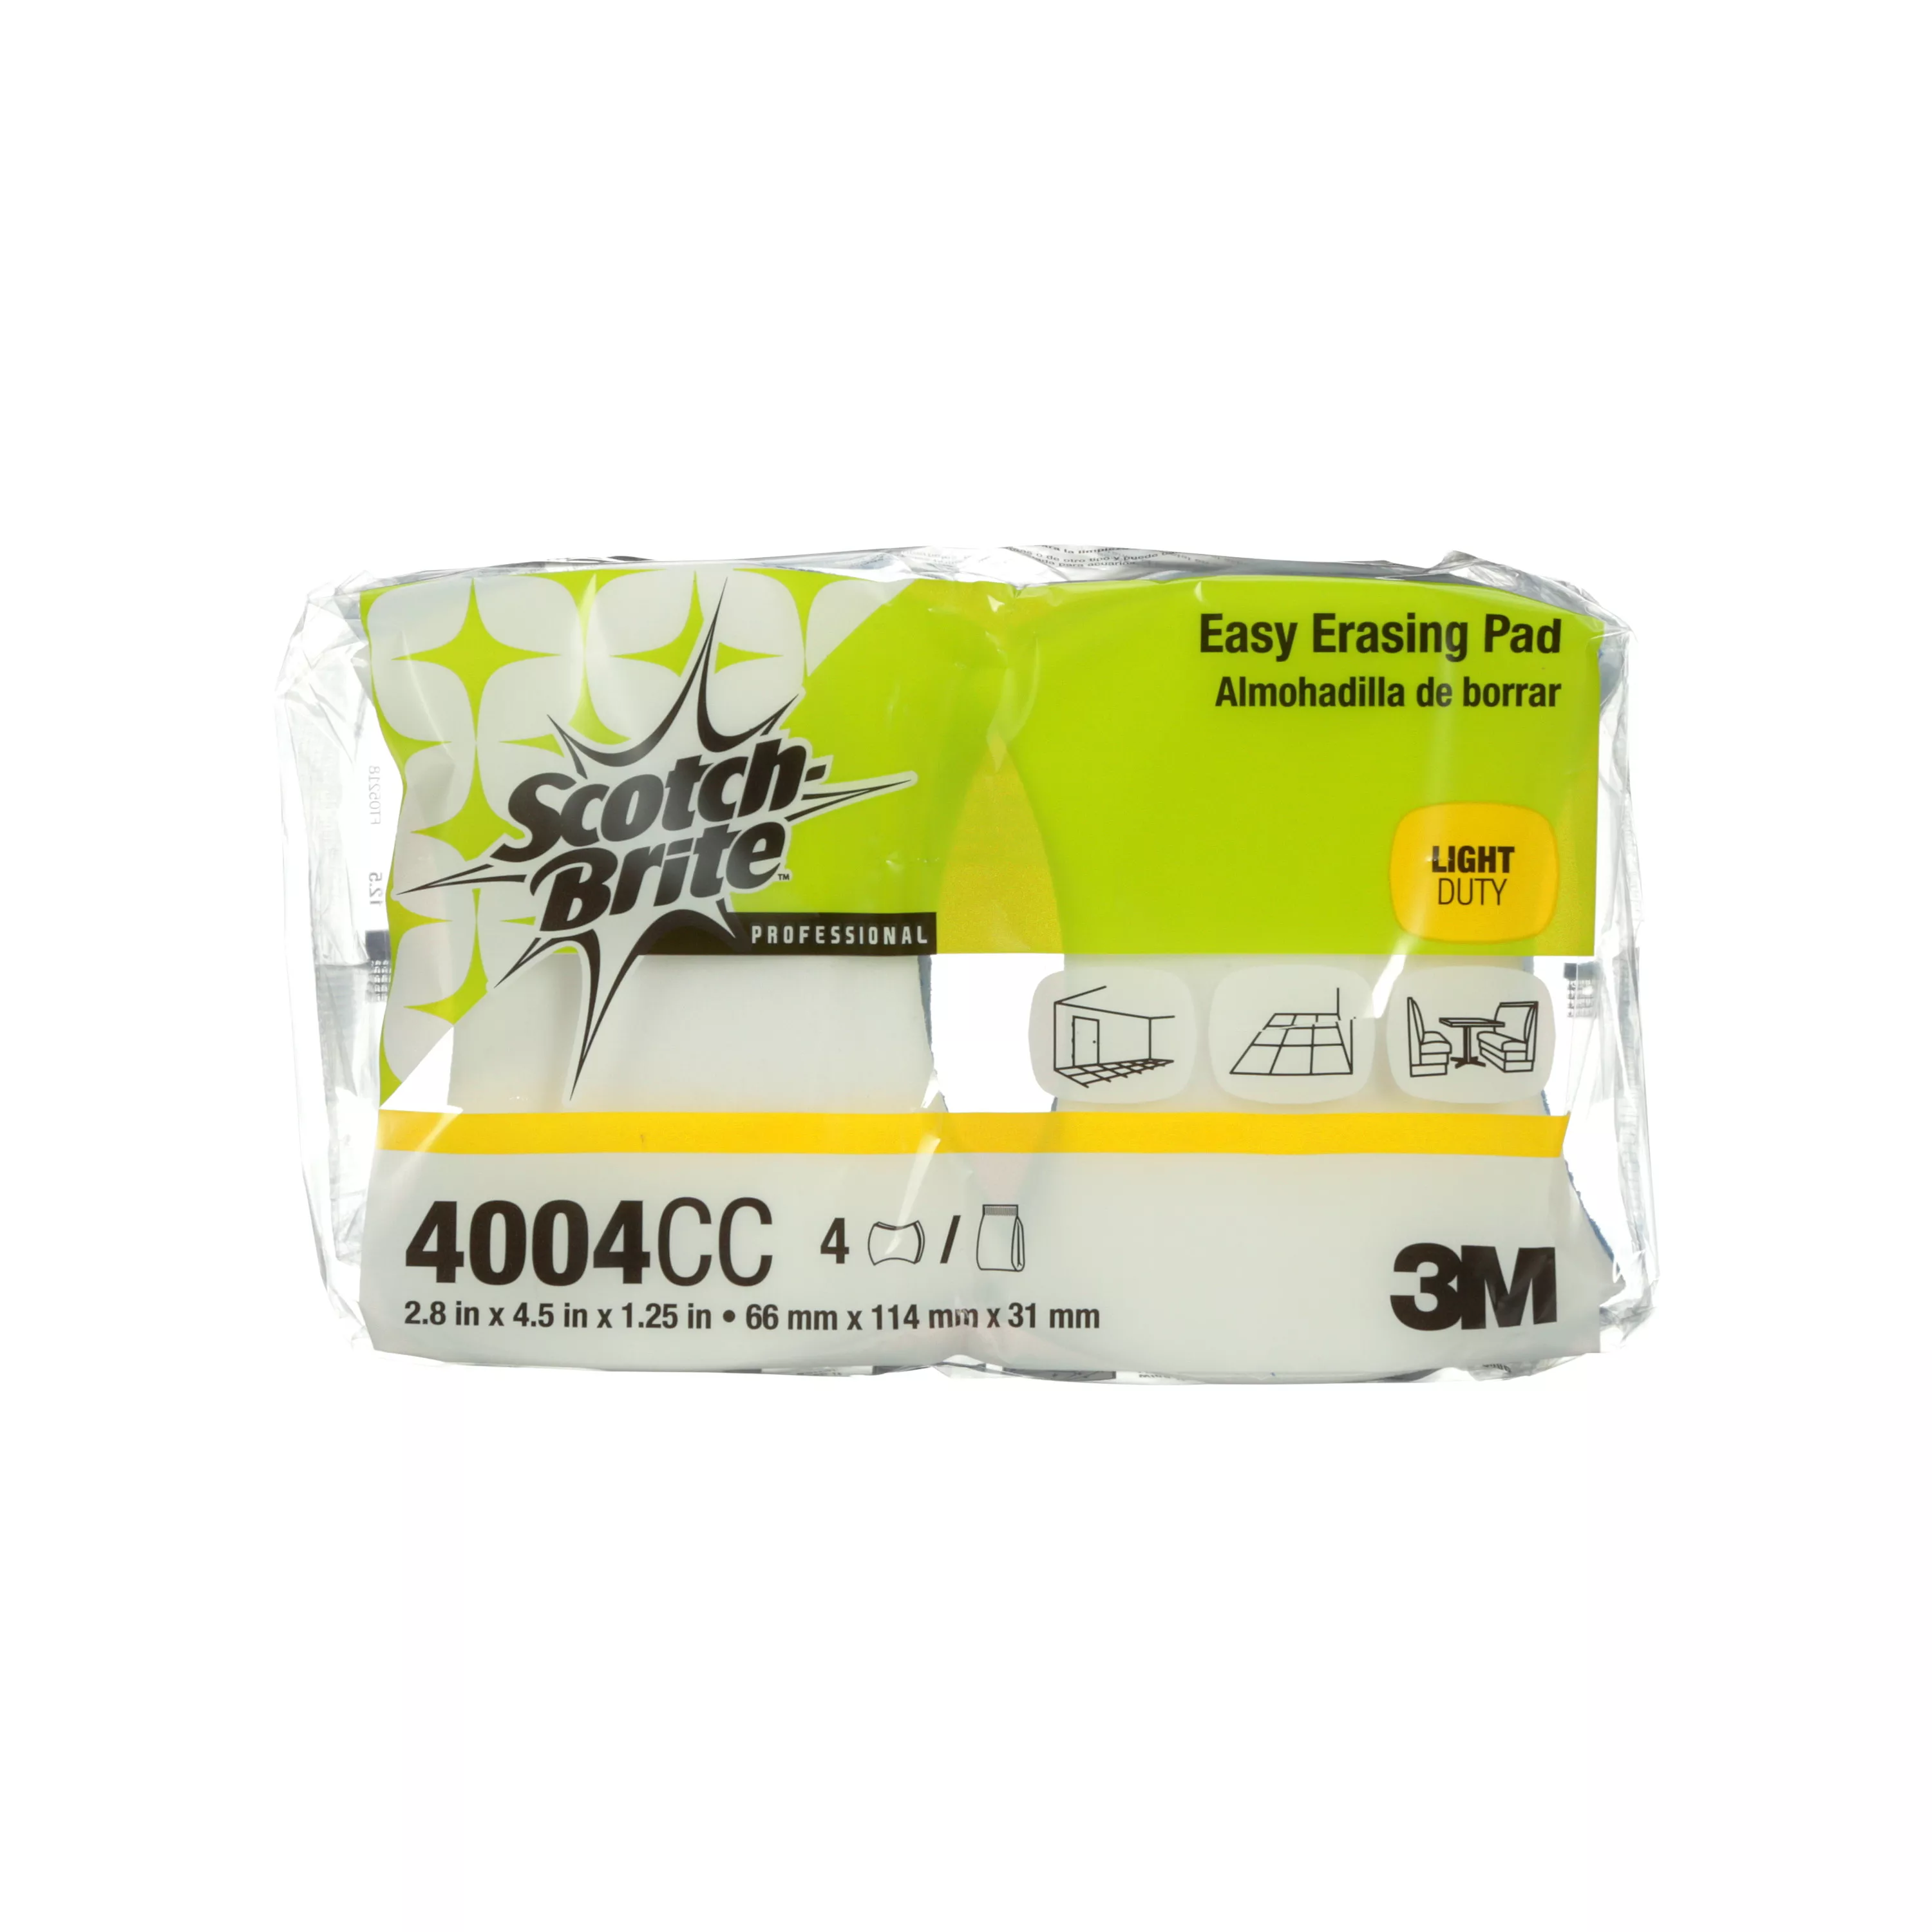 Product Number 4004CC | Scotch-Brite™ Easy Erasing Pad 4004CC